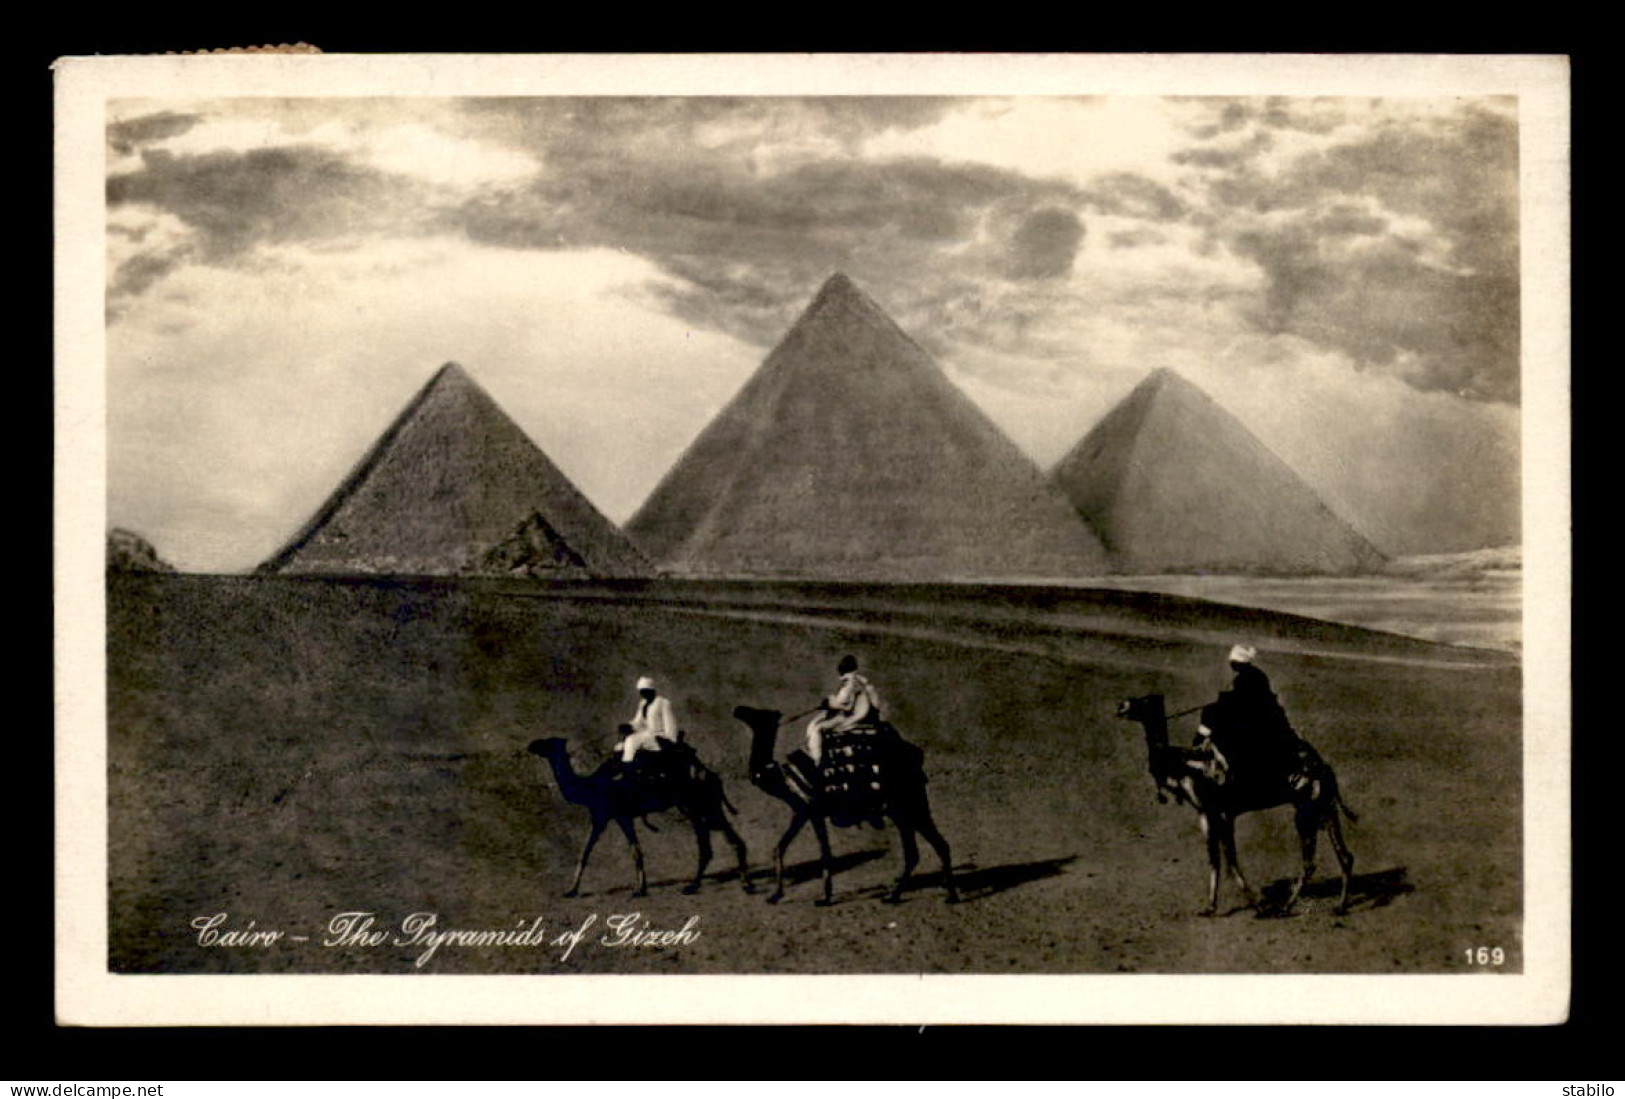 EGYPTE - LENHERT & LANDROCK N°169 - CAIRO - THE PYRAMIDS OF GIZEH - CHAMEAUX - Cairo